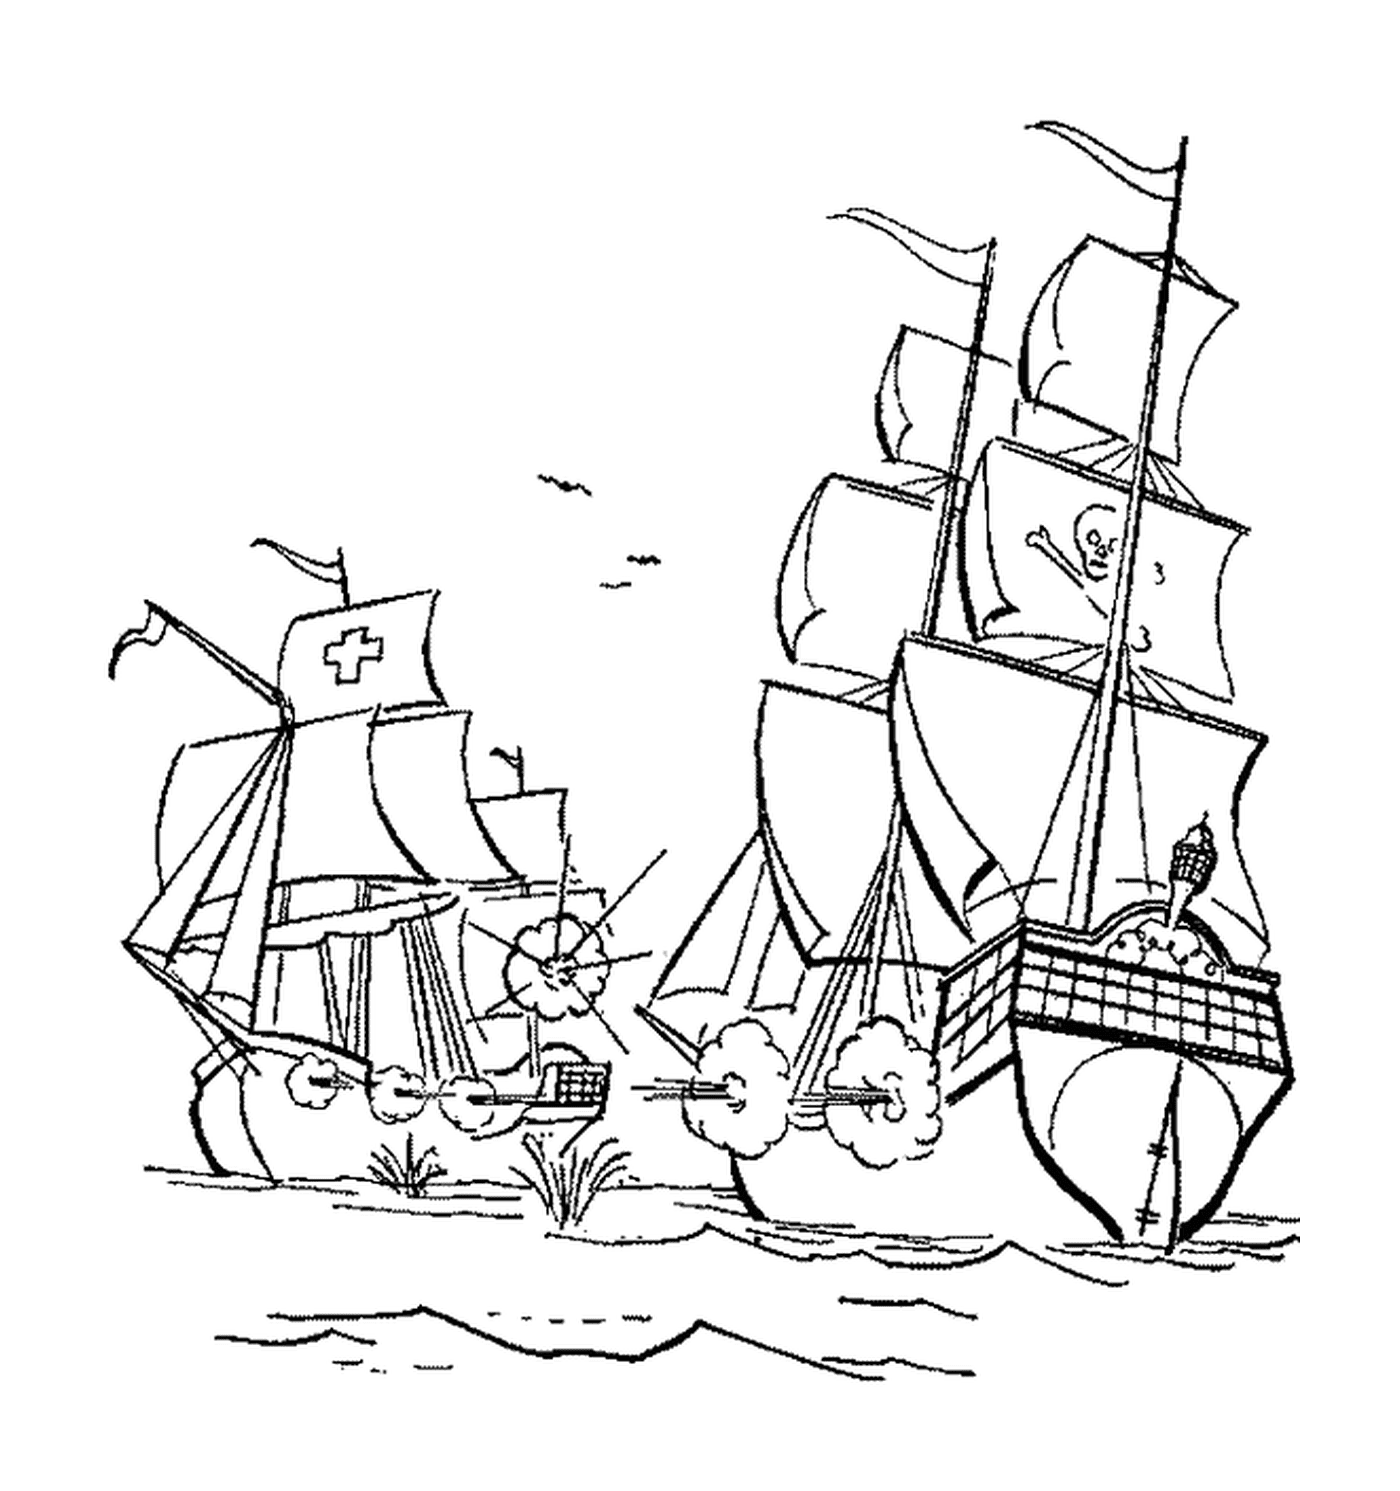  El barco pirata ataca un buque de carga 